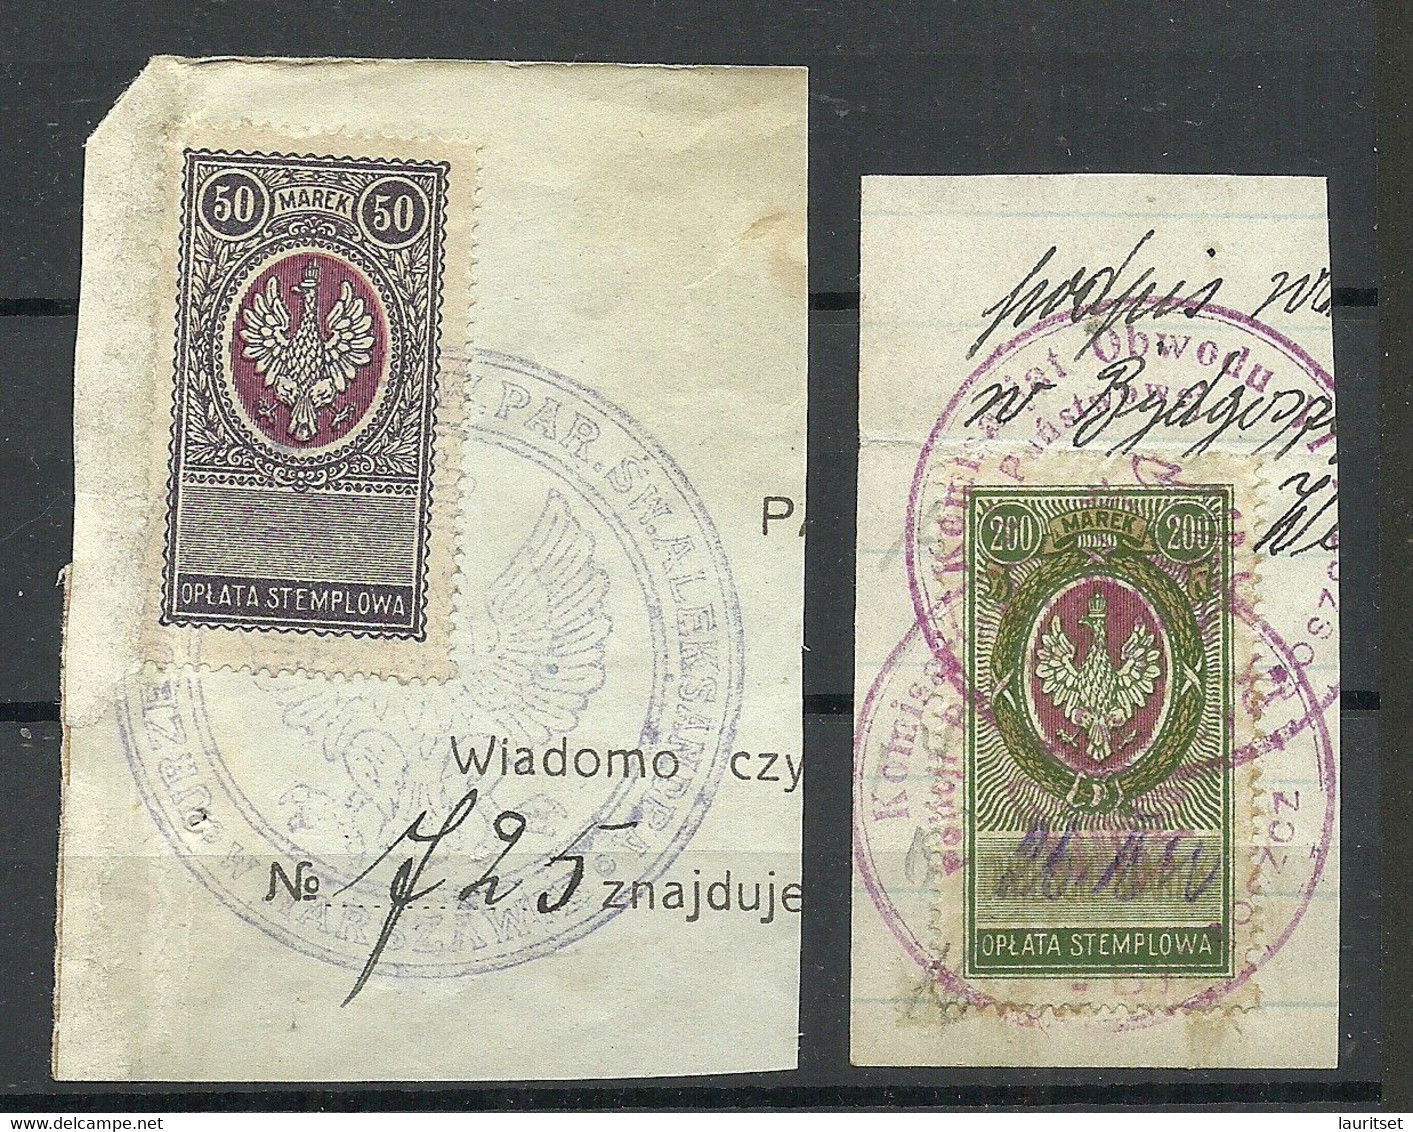 POLEN Poland 1920ies Documentary Tax Stempelmarken Revenue Oplata Stemplowa 50 & 100 M. O On Out Cut - Revenue Stamps